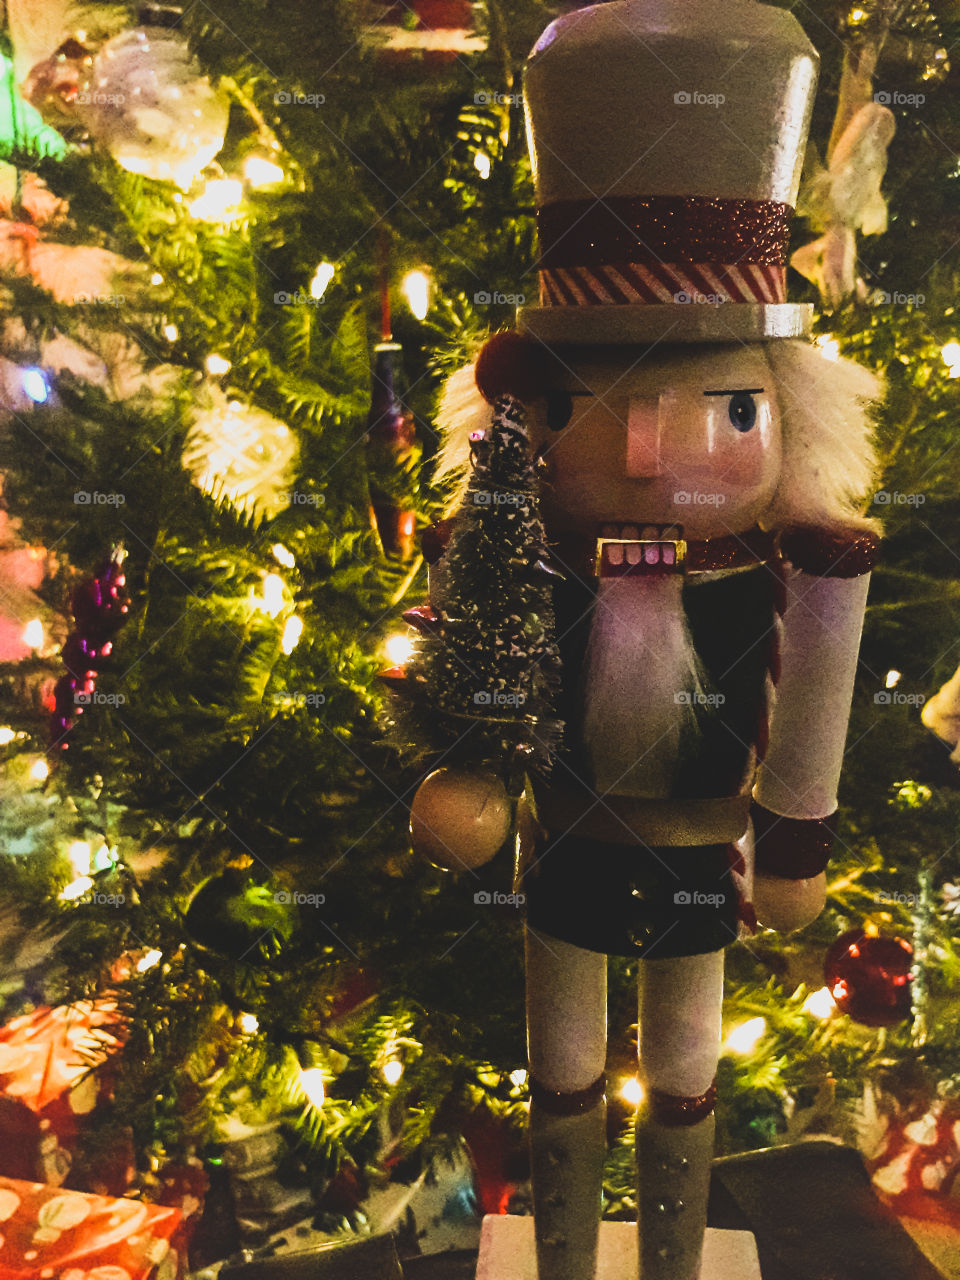 A Nutcracker Christmas decoration is softly illuminated, by the Christmas tree.